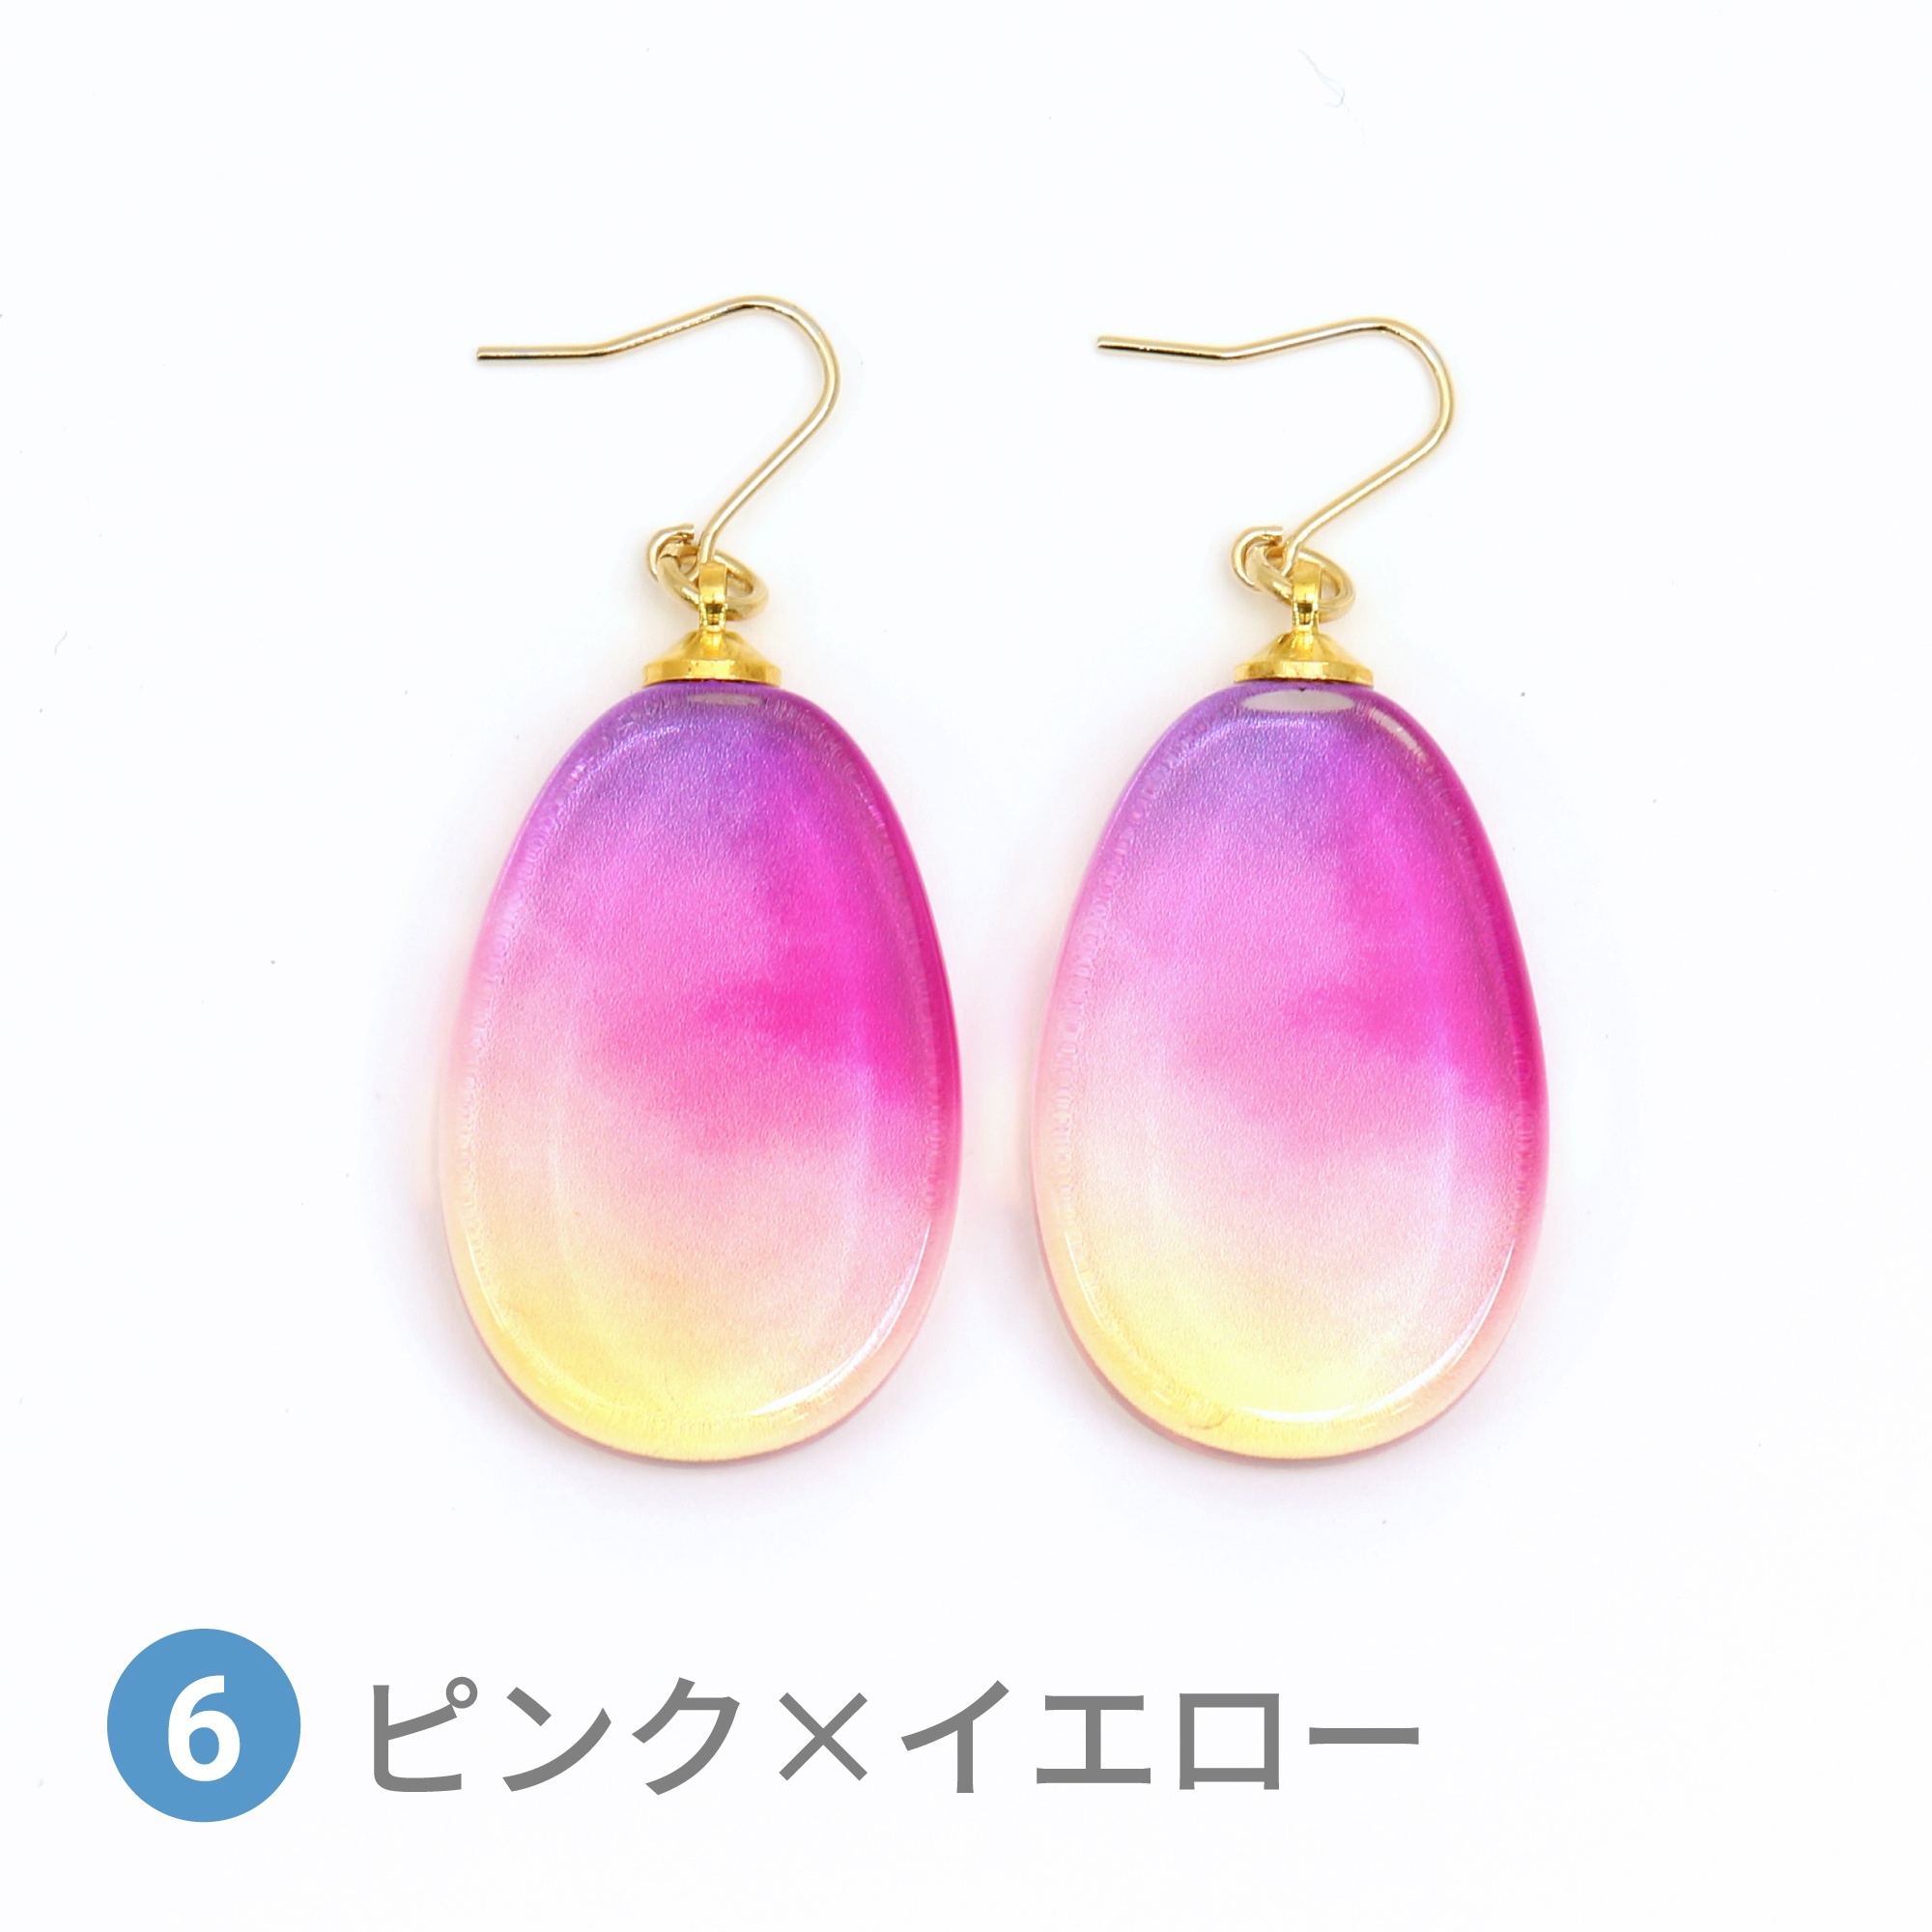 Glass accessories Pierced Earring AURORA pink&yellow drop shape